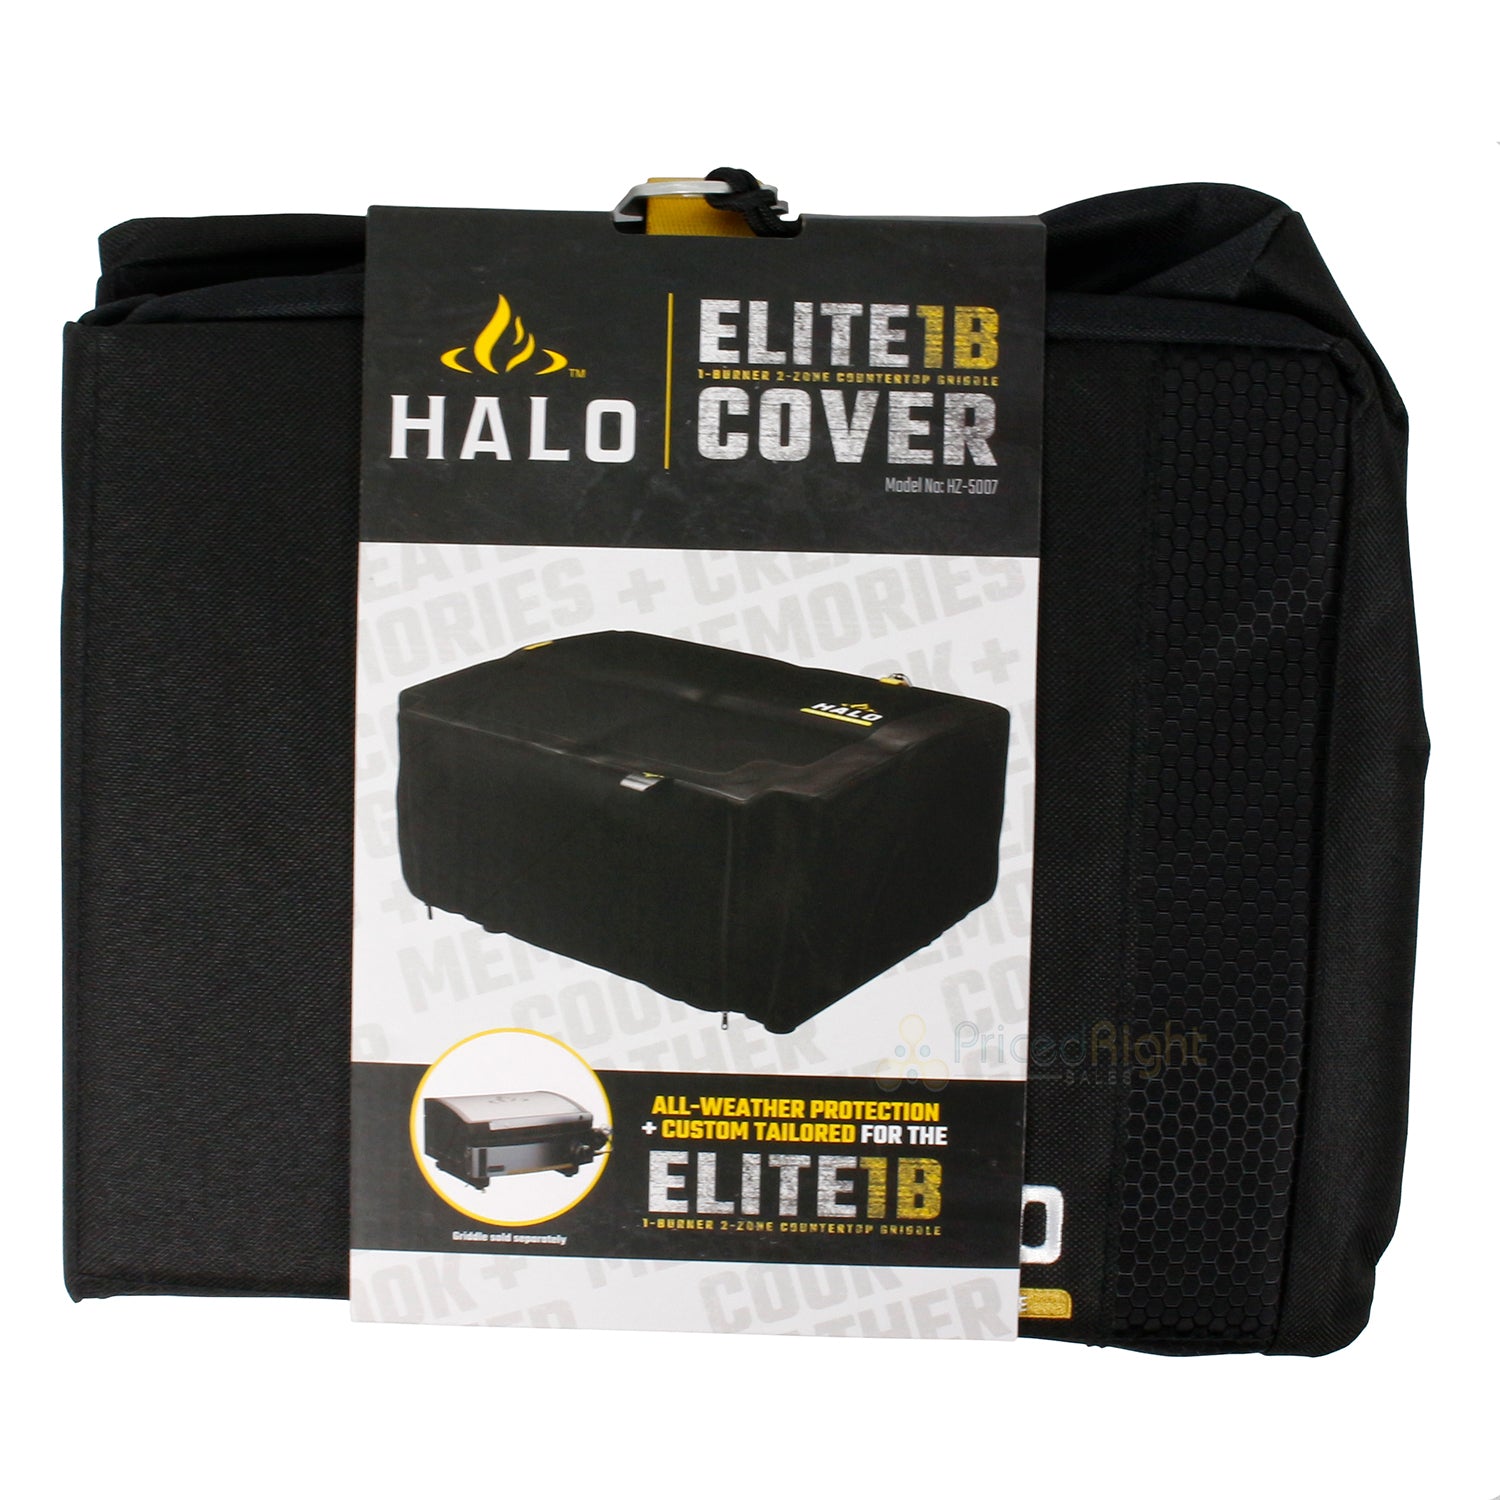 Halo Elite1B Outdoor Countertop Griddle